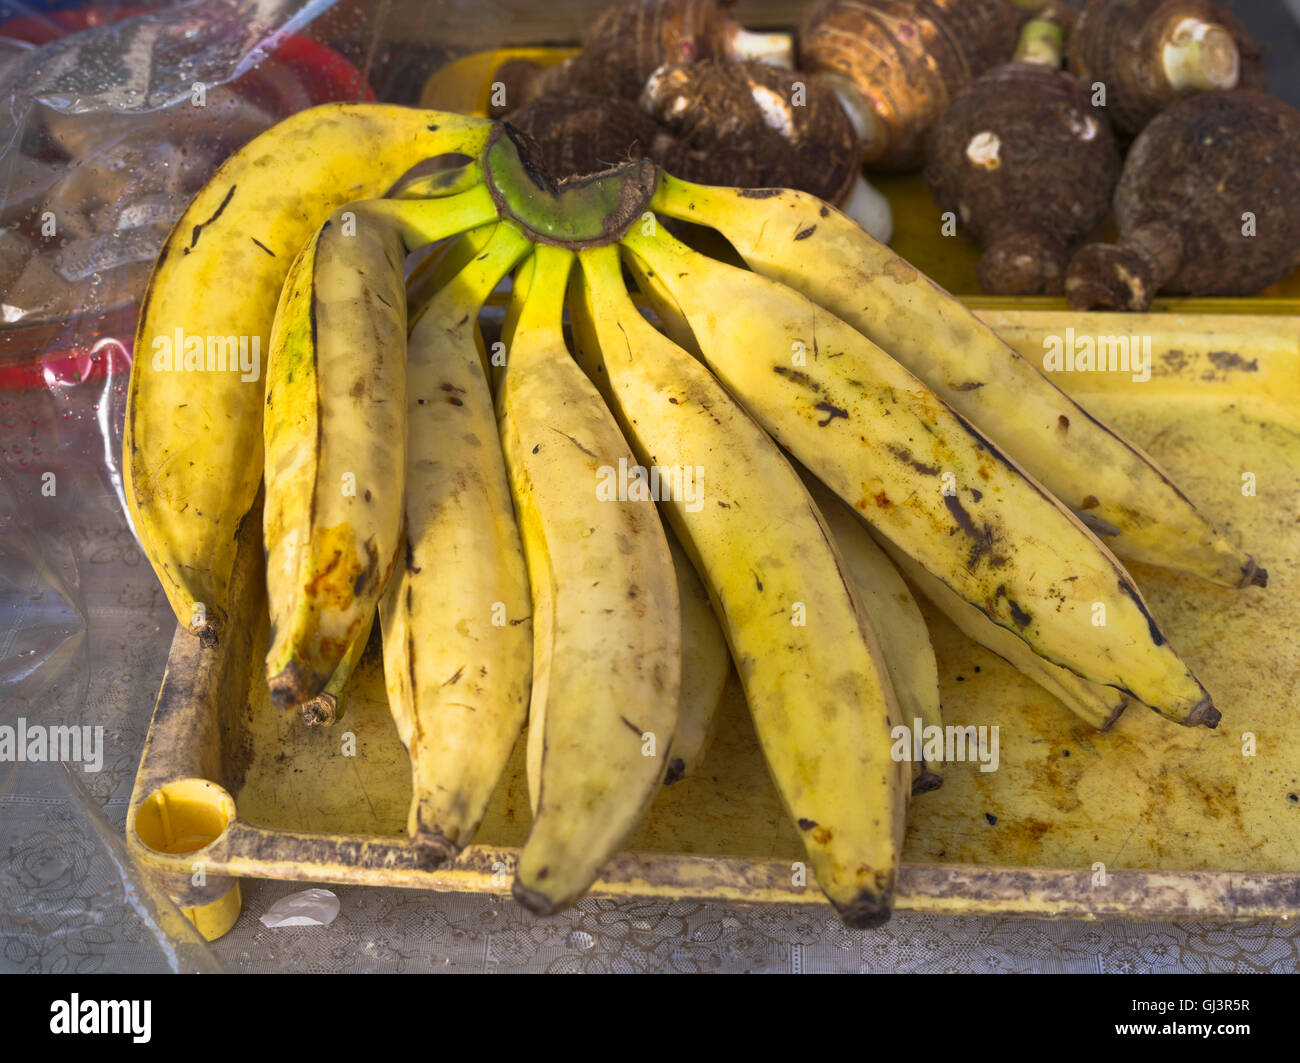 dh St George GRENADA CARIBBEAN Fruit market stall manojo de plátano banano maduro Foto de stock